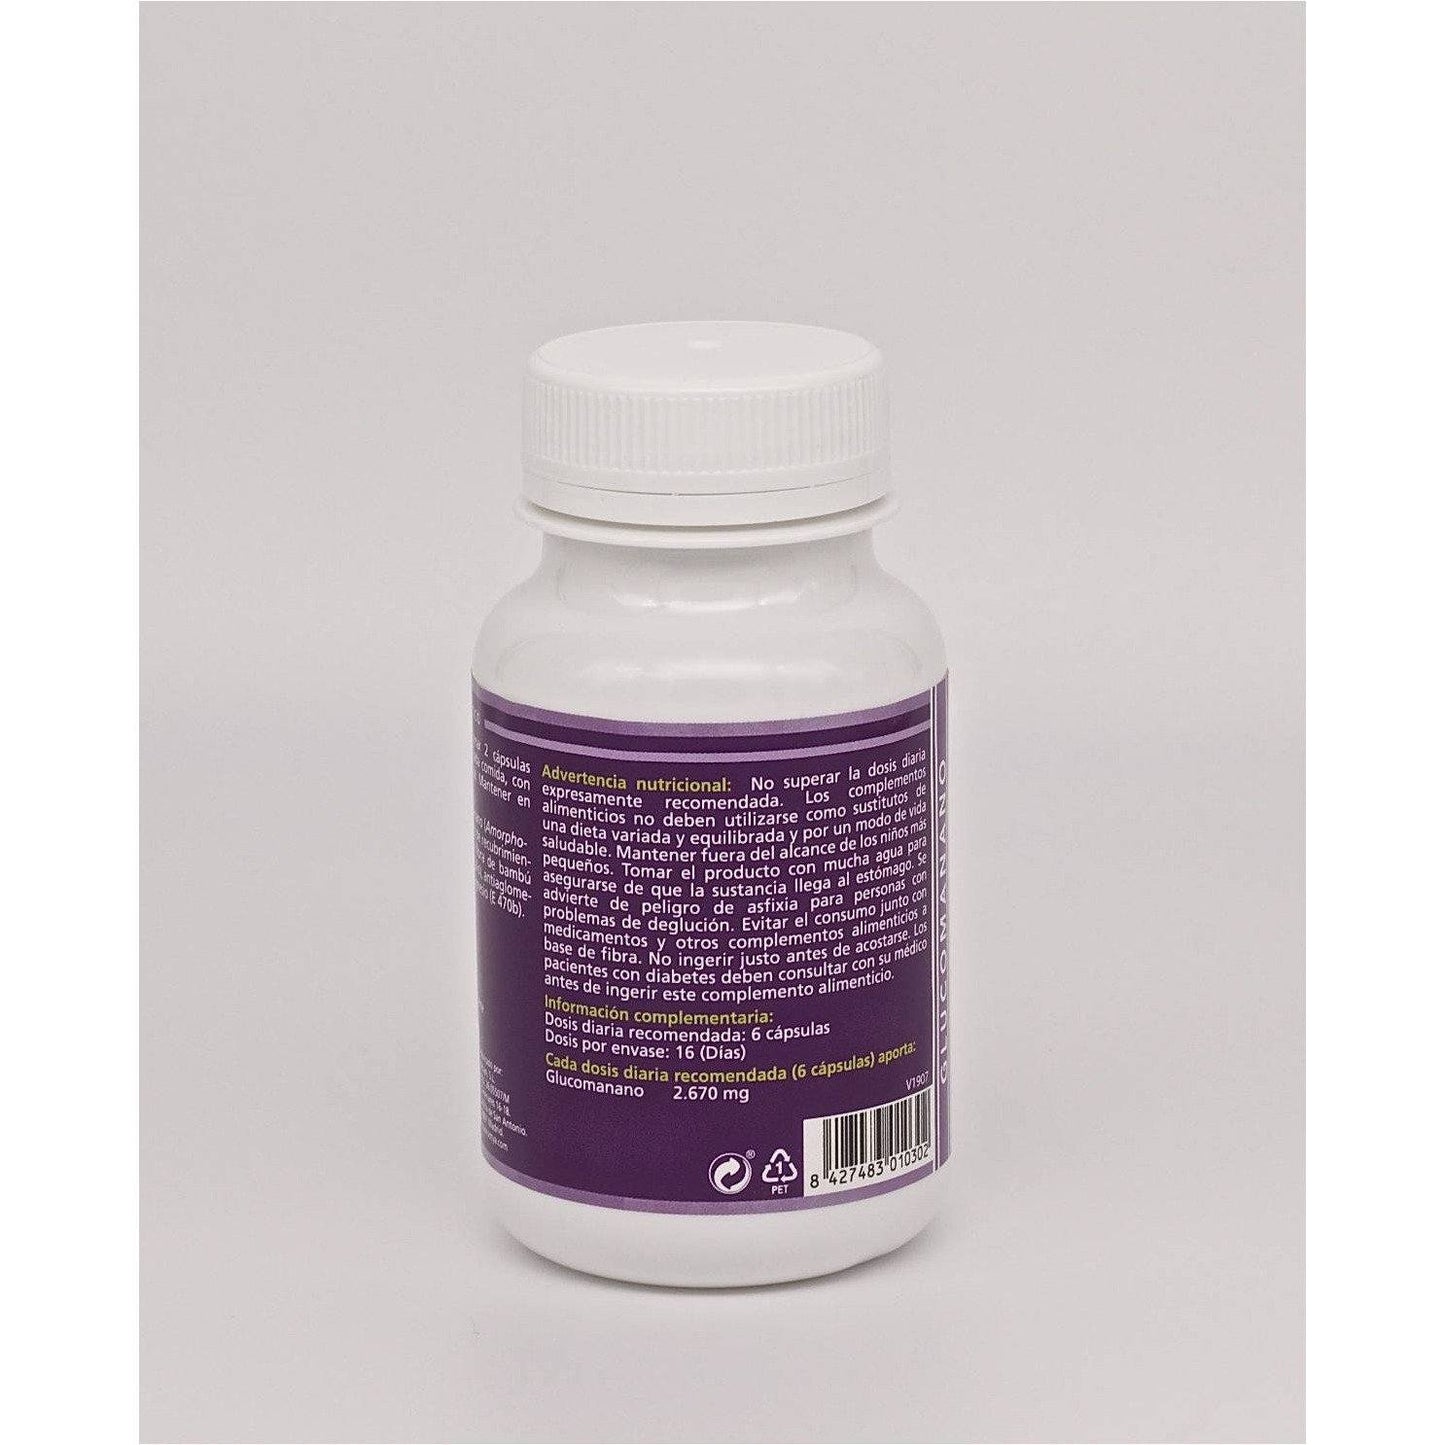 Glucomanano 600 mg 100 Capsulas | Sotya - Dietetica Ferrer